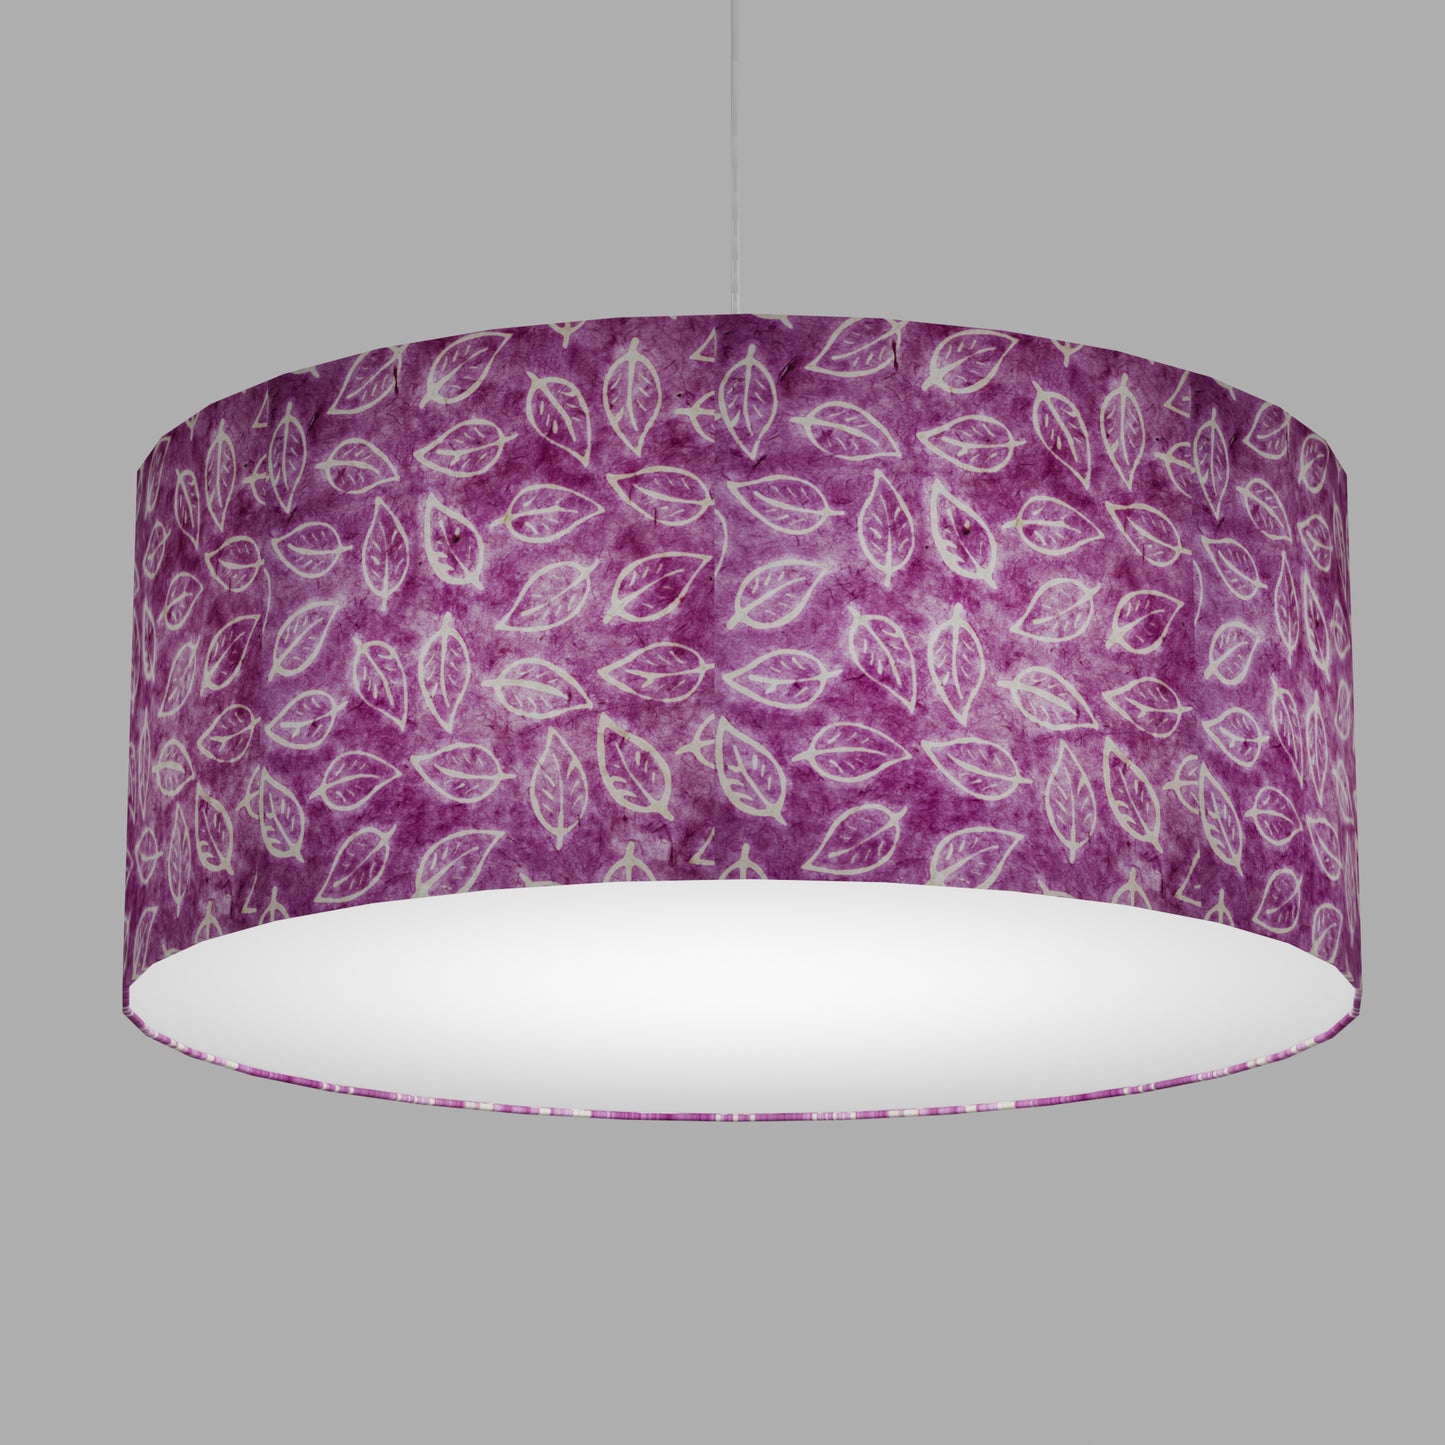 Drum Lamp Shade - P68 - Batik Leaf on Purple, 70cm(d) x 30cm(h)